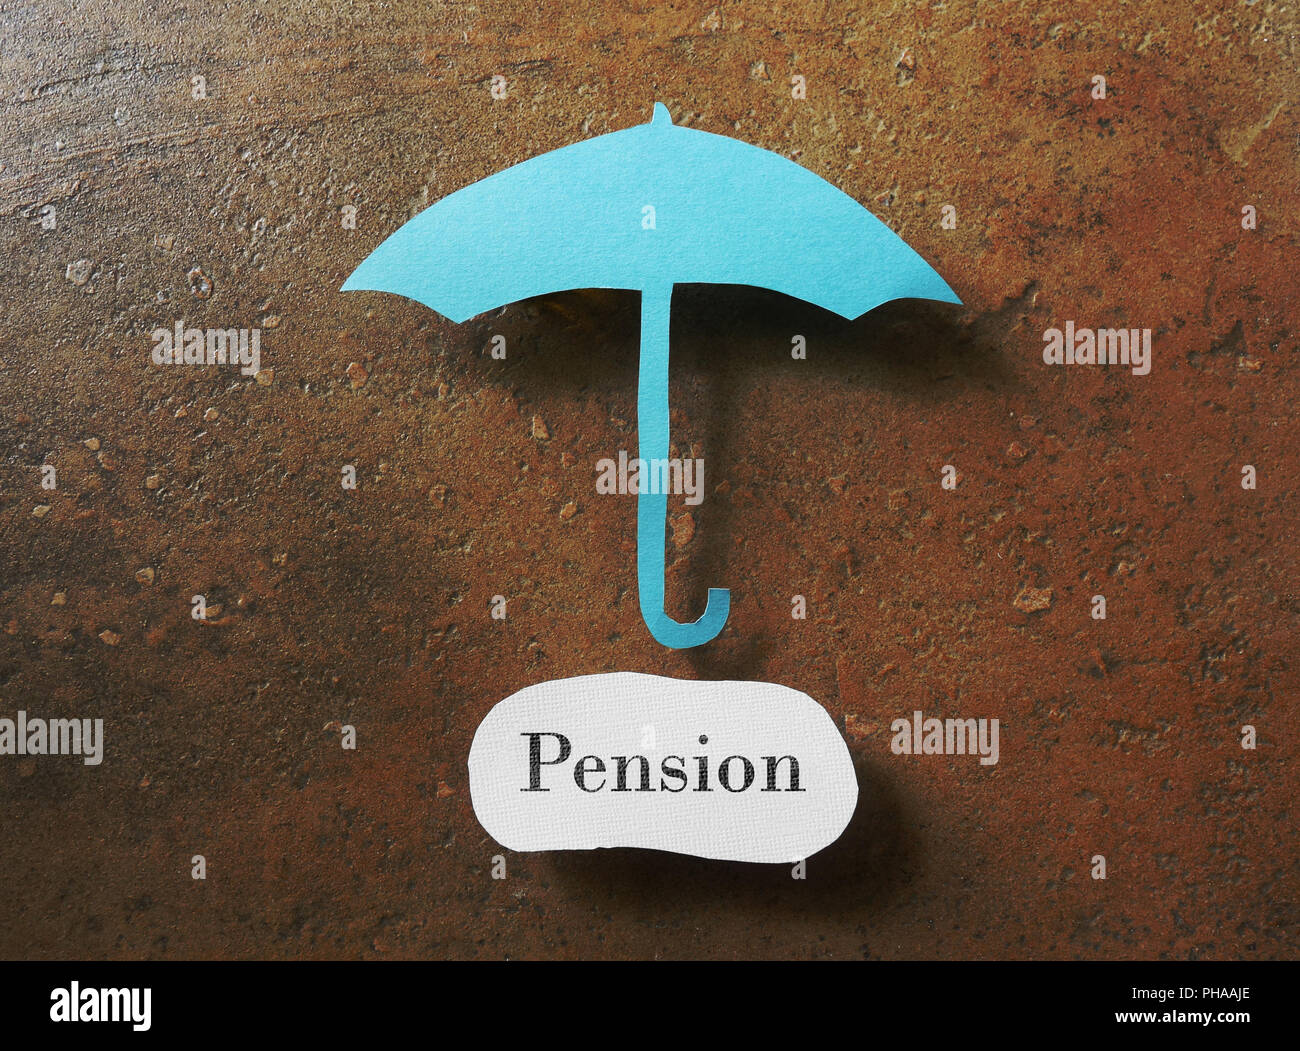 Pension plan Stock Photo